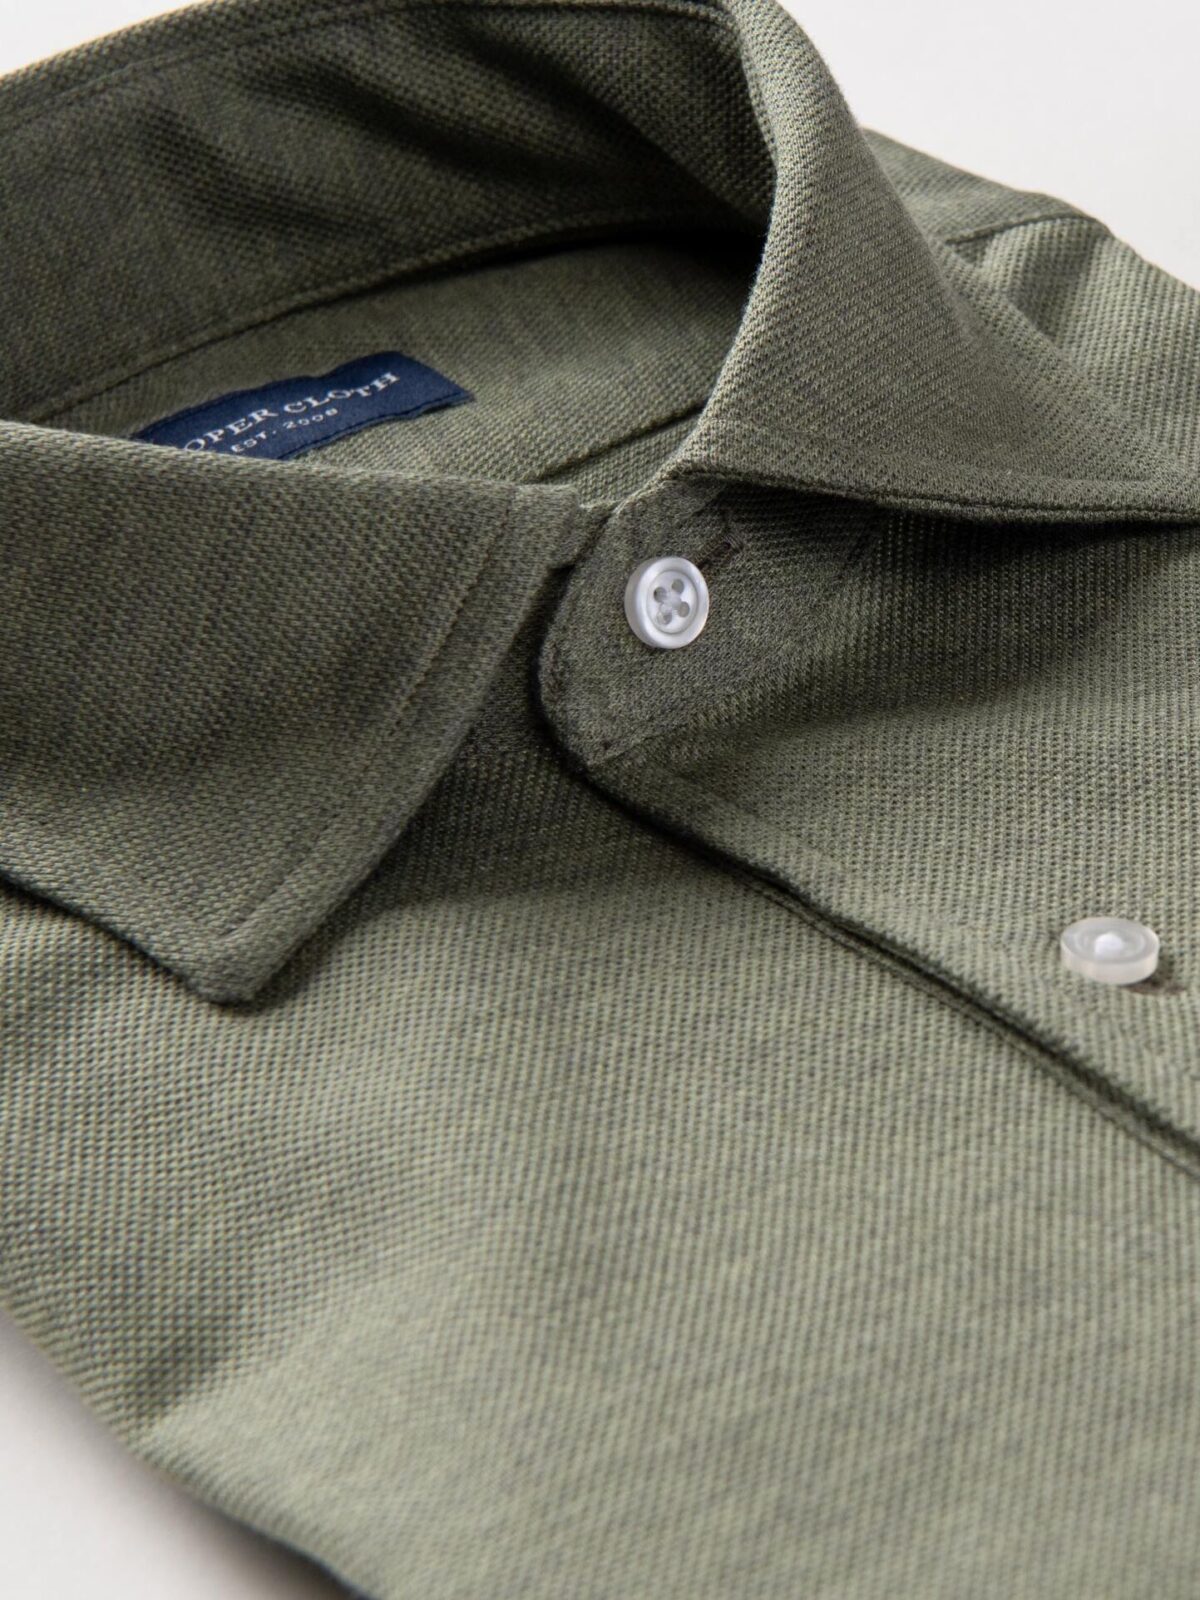 Custom Fitted Pique Polo Shirt / Long-Sleeve Light Grey